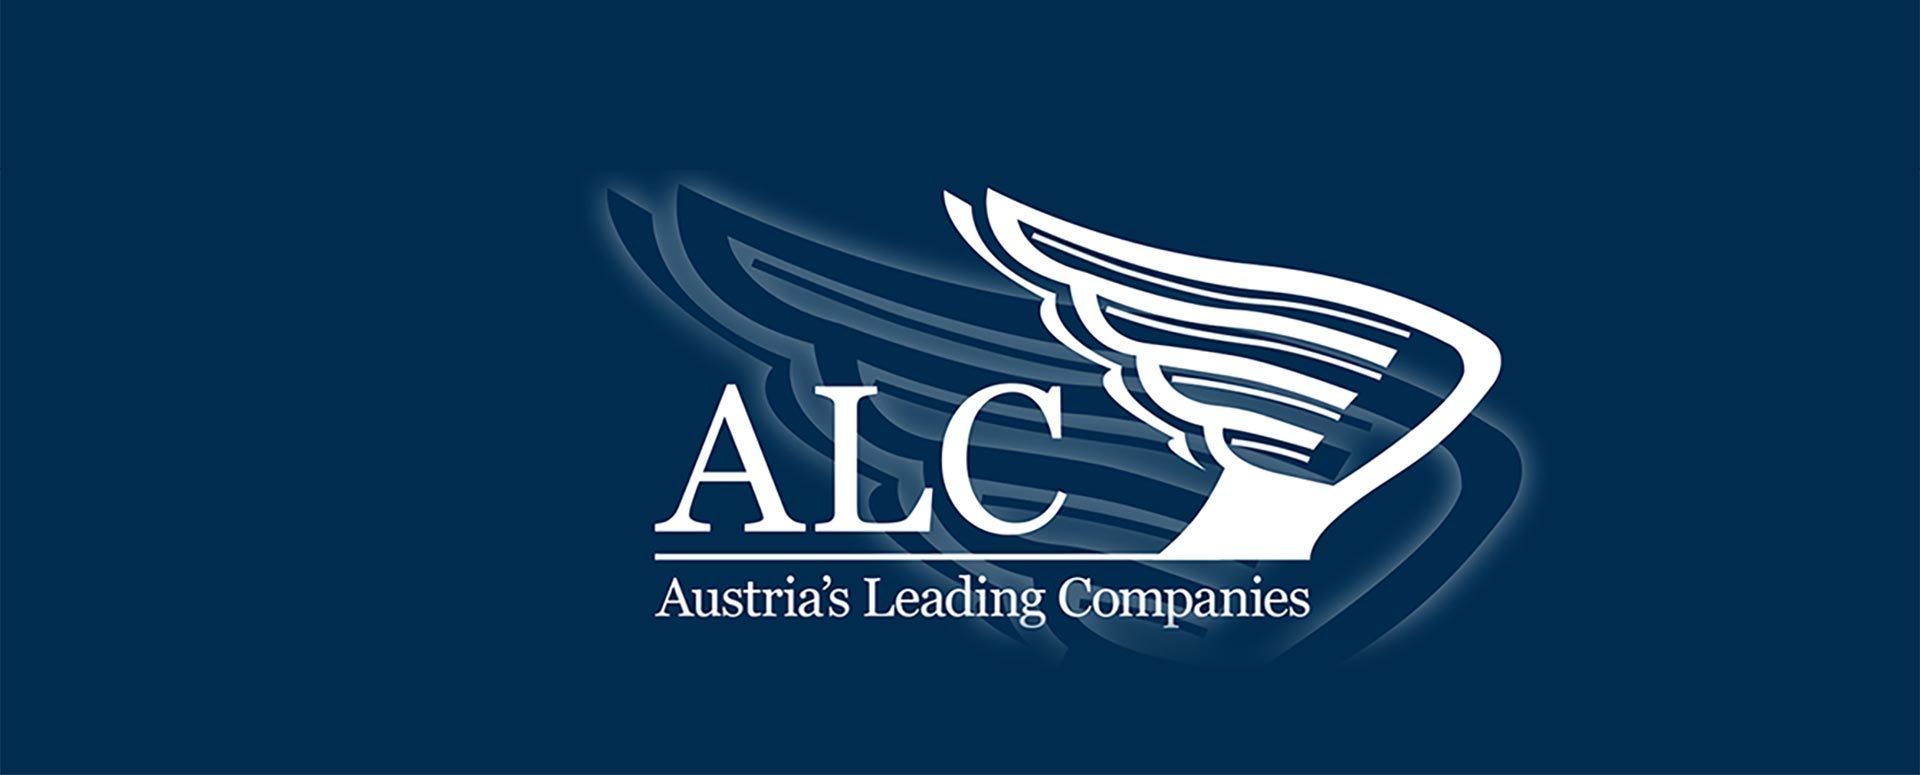 Austria's Leading Companies 2019 (© Great Lengths)